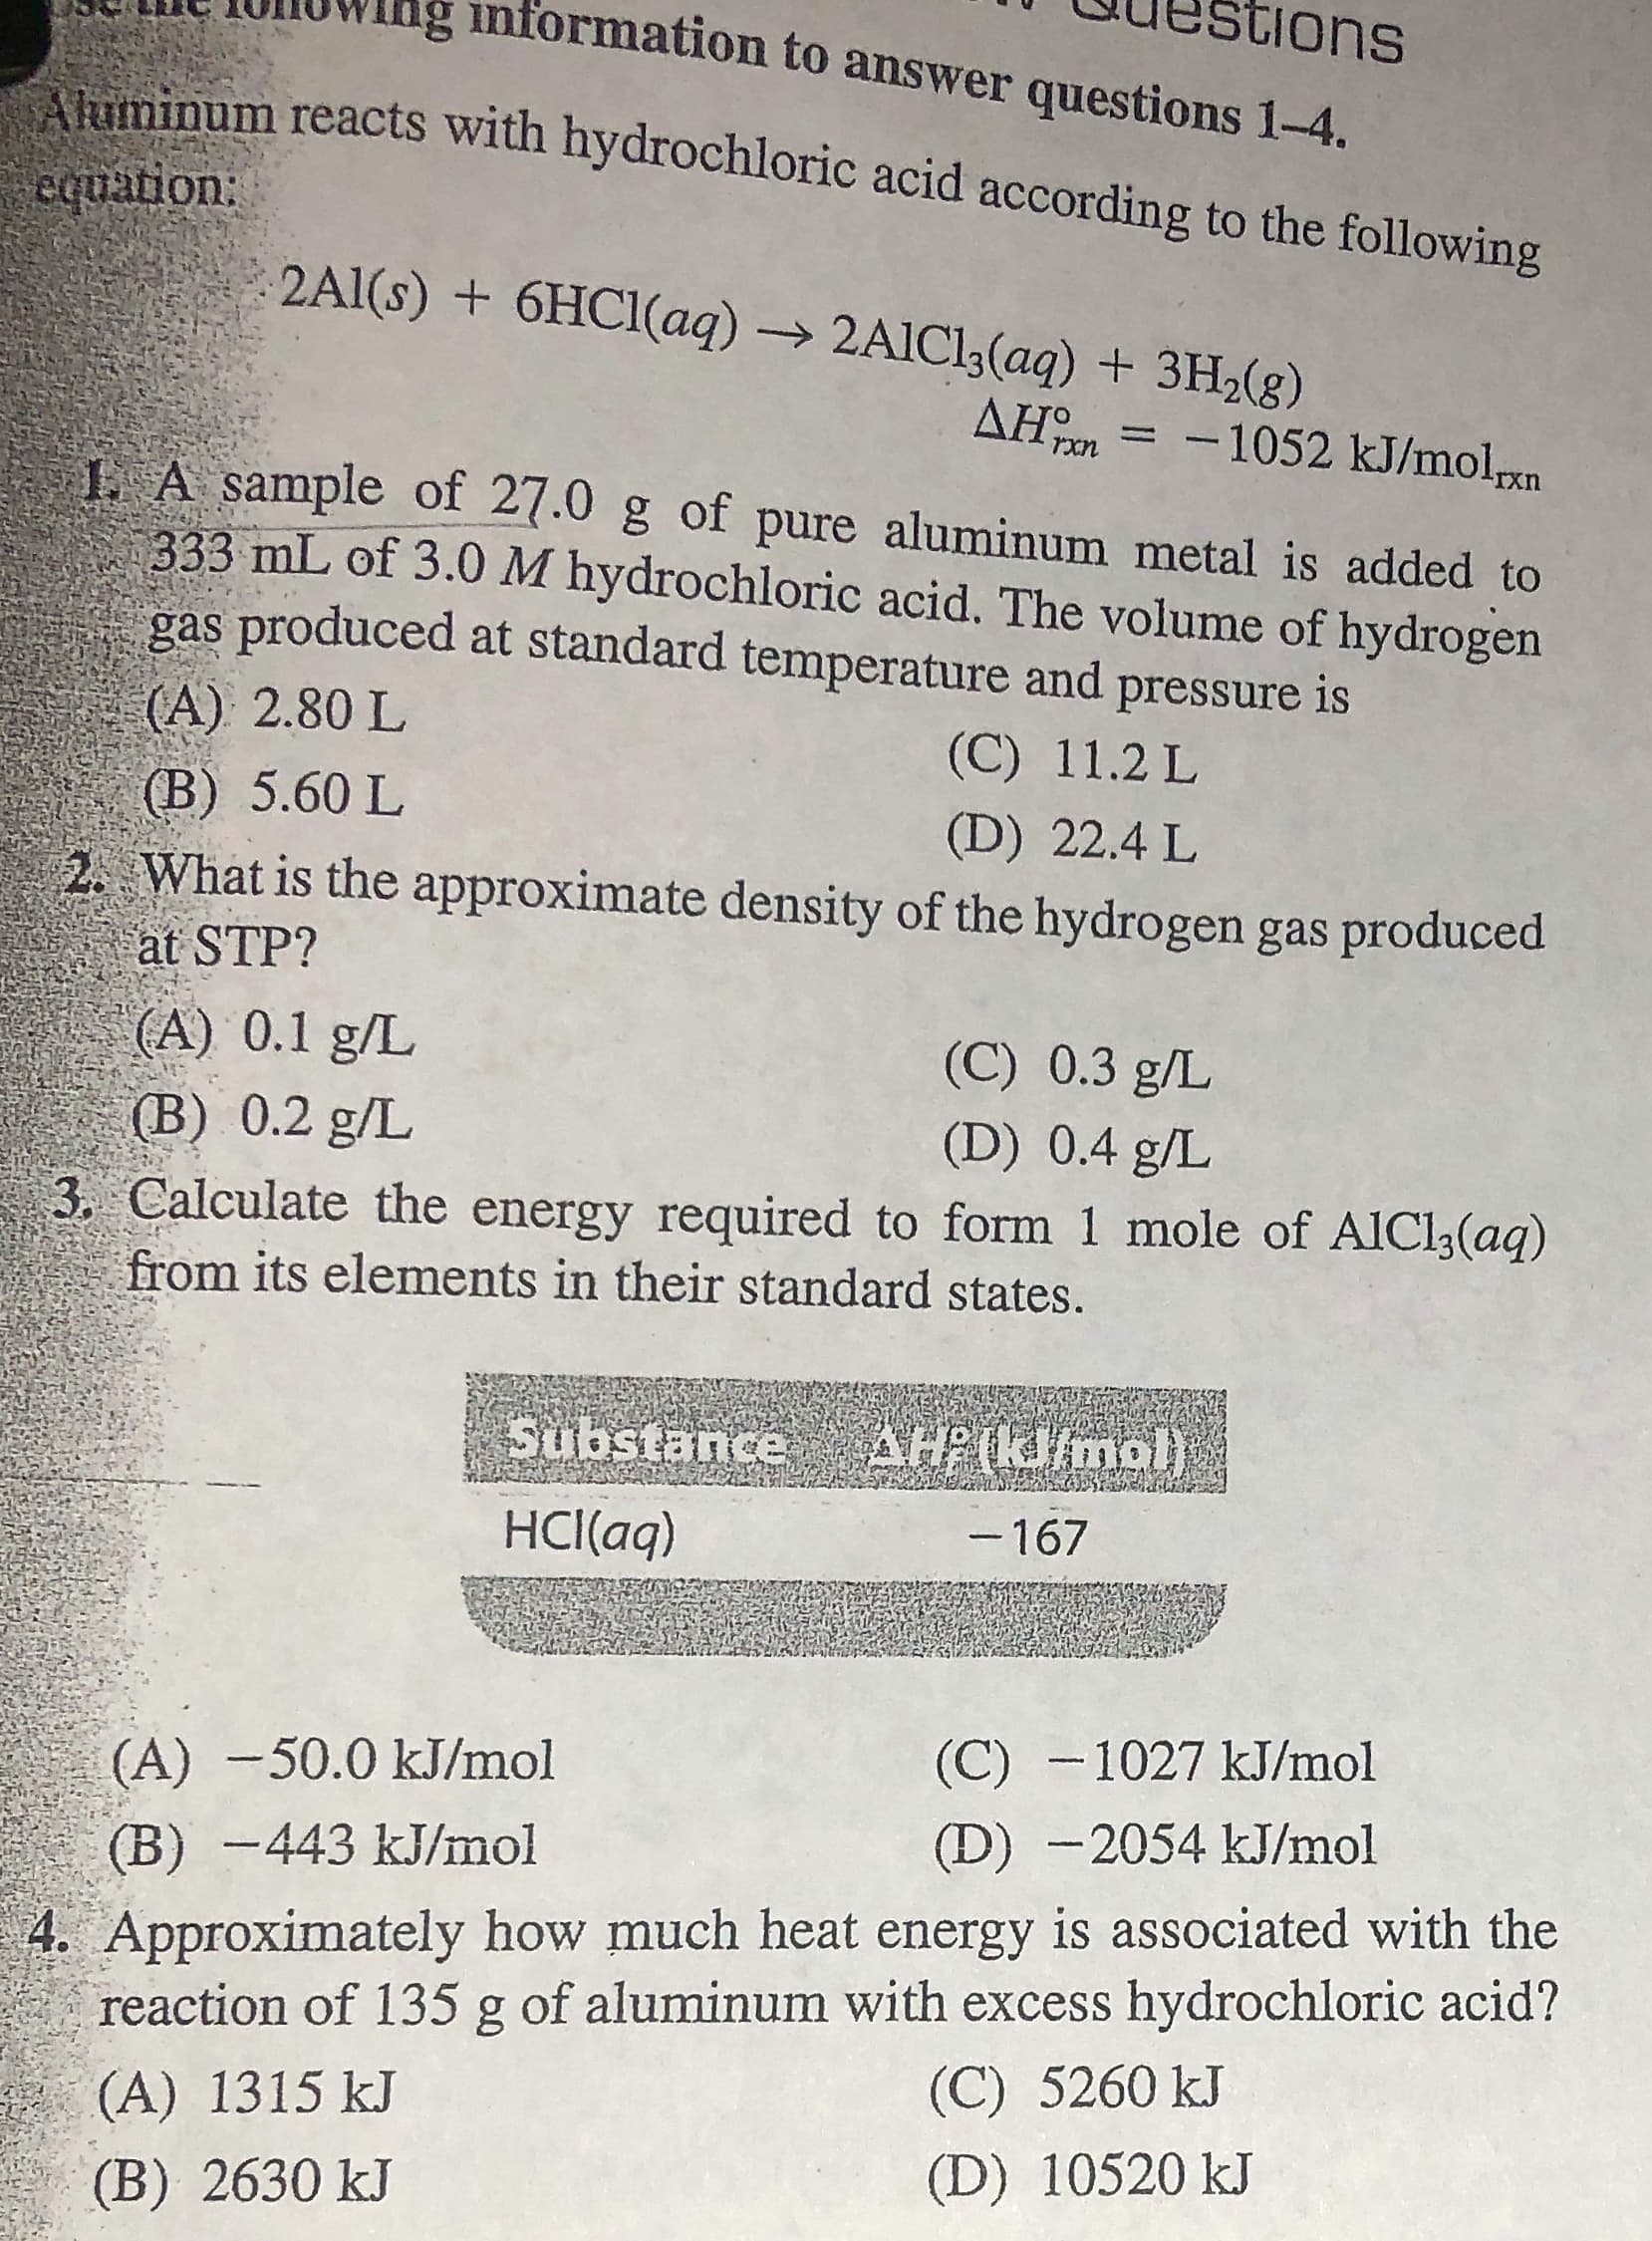 3. Calculate the energy required to form 1 mole of AlCl3(aq)
from its elements in their standard states.
Sübstance
AHP((J/mal)
HCI(aq)
-167
(A) -50.0 kJ/mol
(C) -1027 kJ/mol
(B) -443 kJ/mol
(D) -2054 kJ/mol
